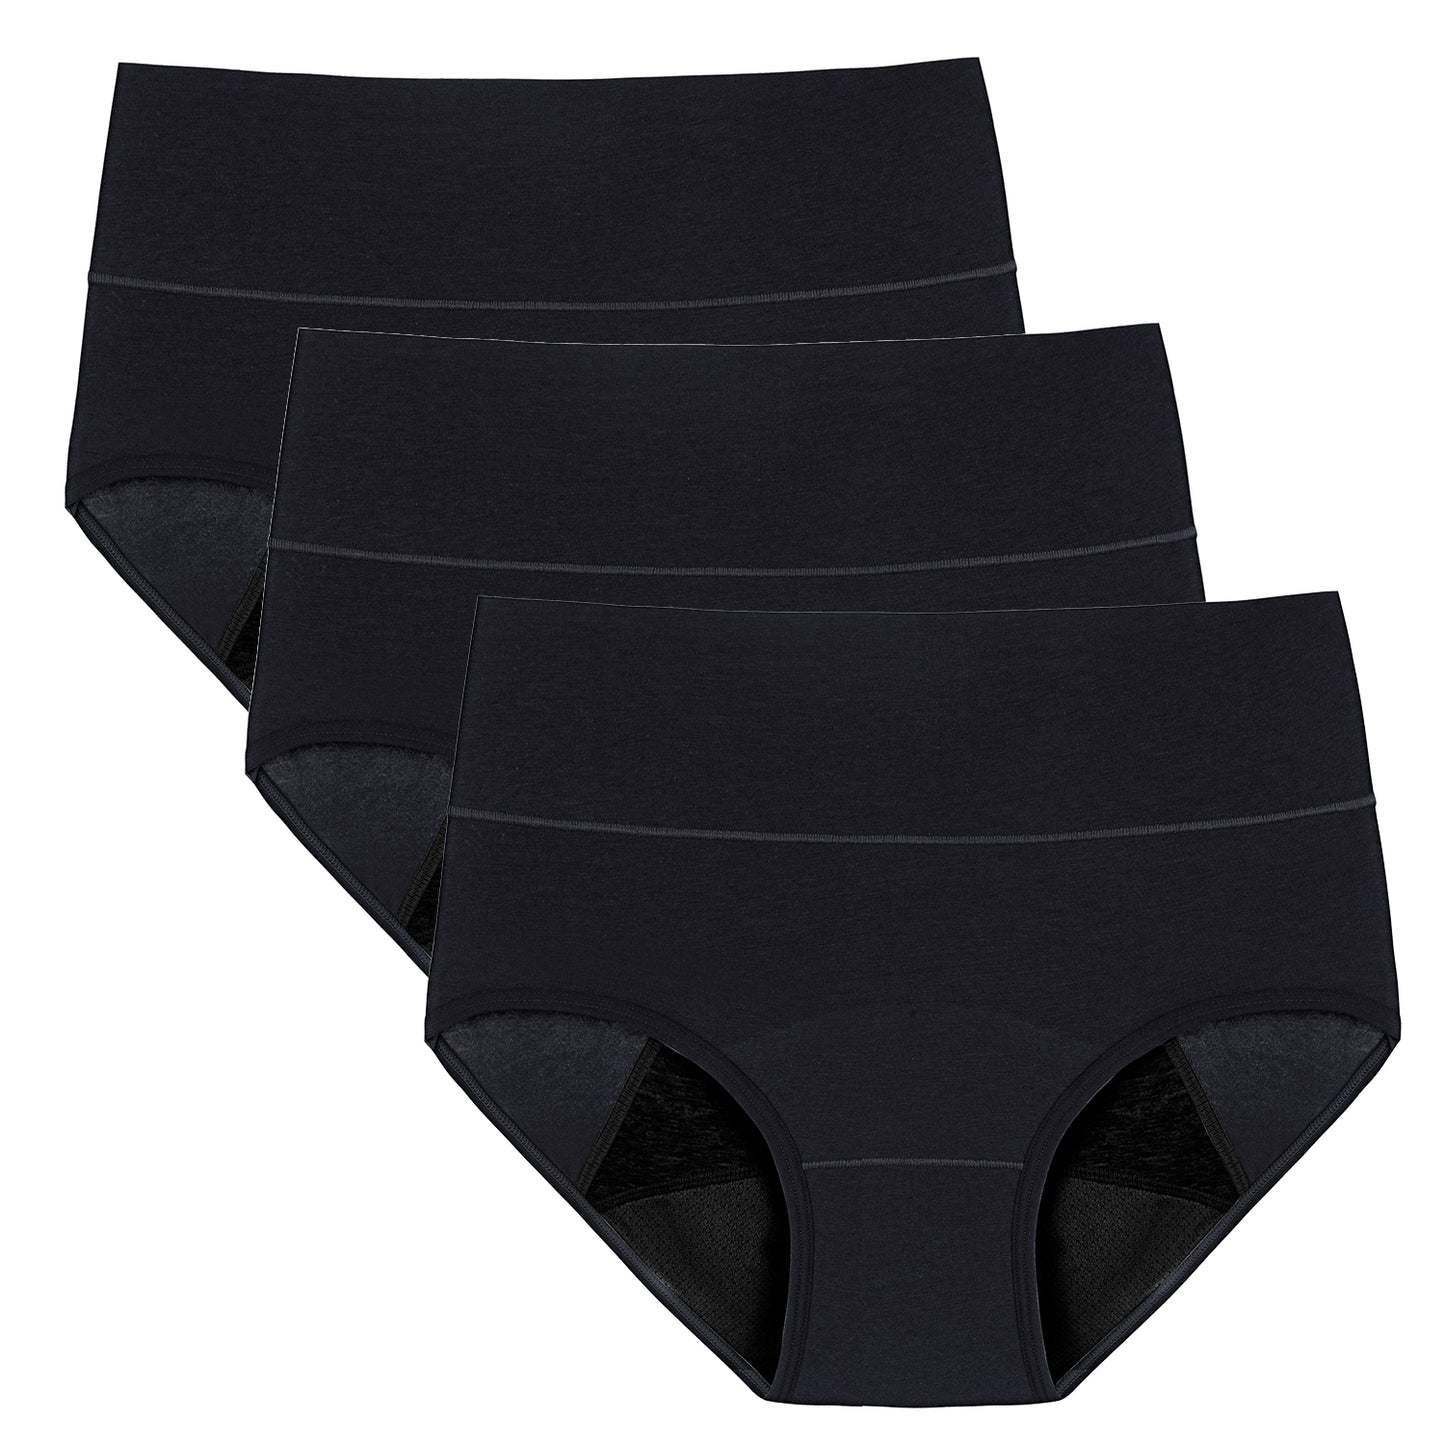 Feitycom Period Underwear Menstrual Incontinence Cotton Boxers for Women  Heavy Flow Absorbent Boy Shorts Leak Proof Panties (XXXL, Black 2Pack)